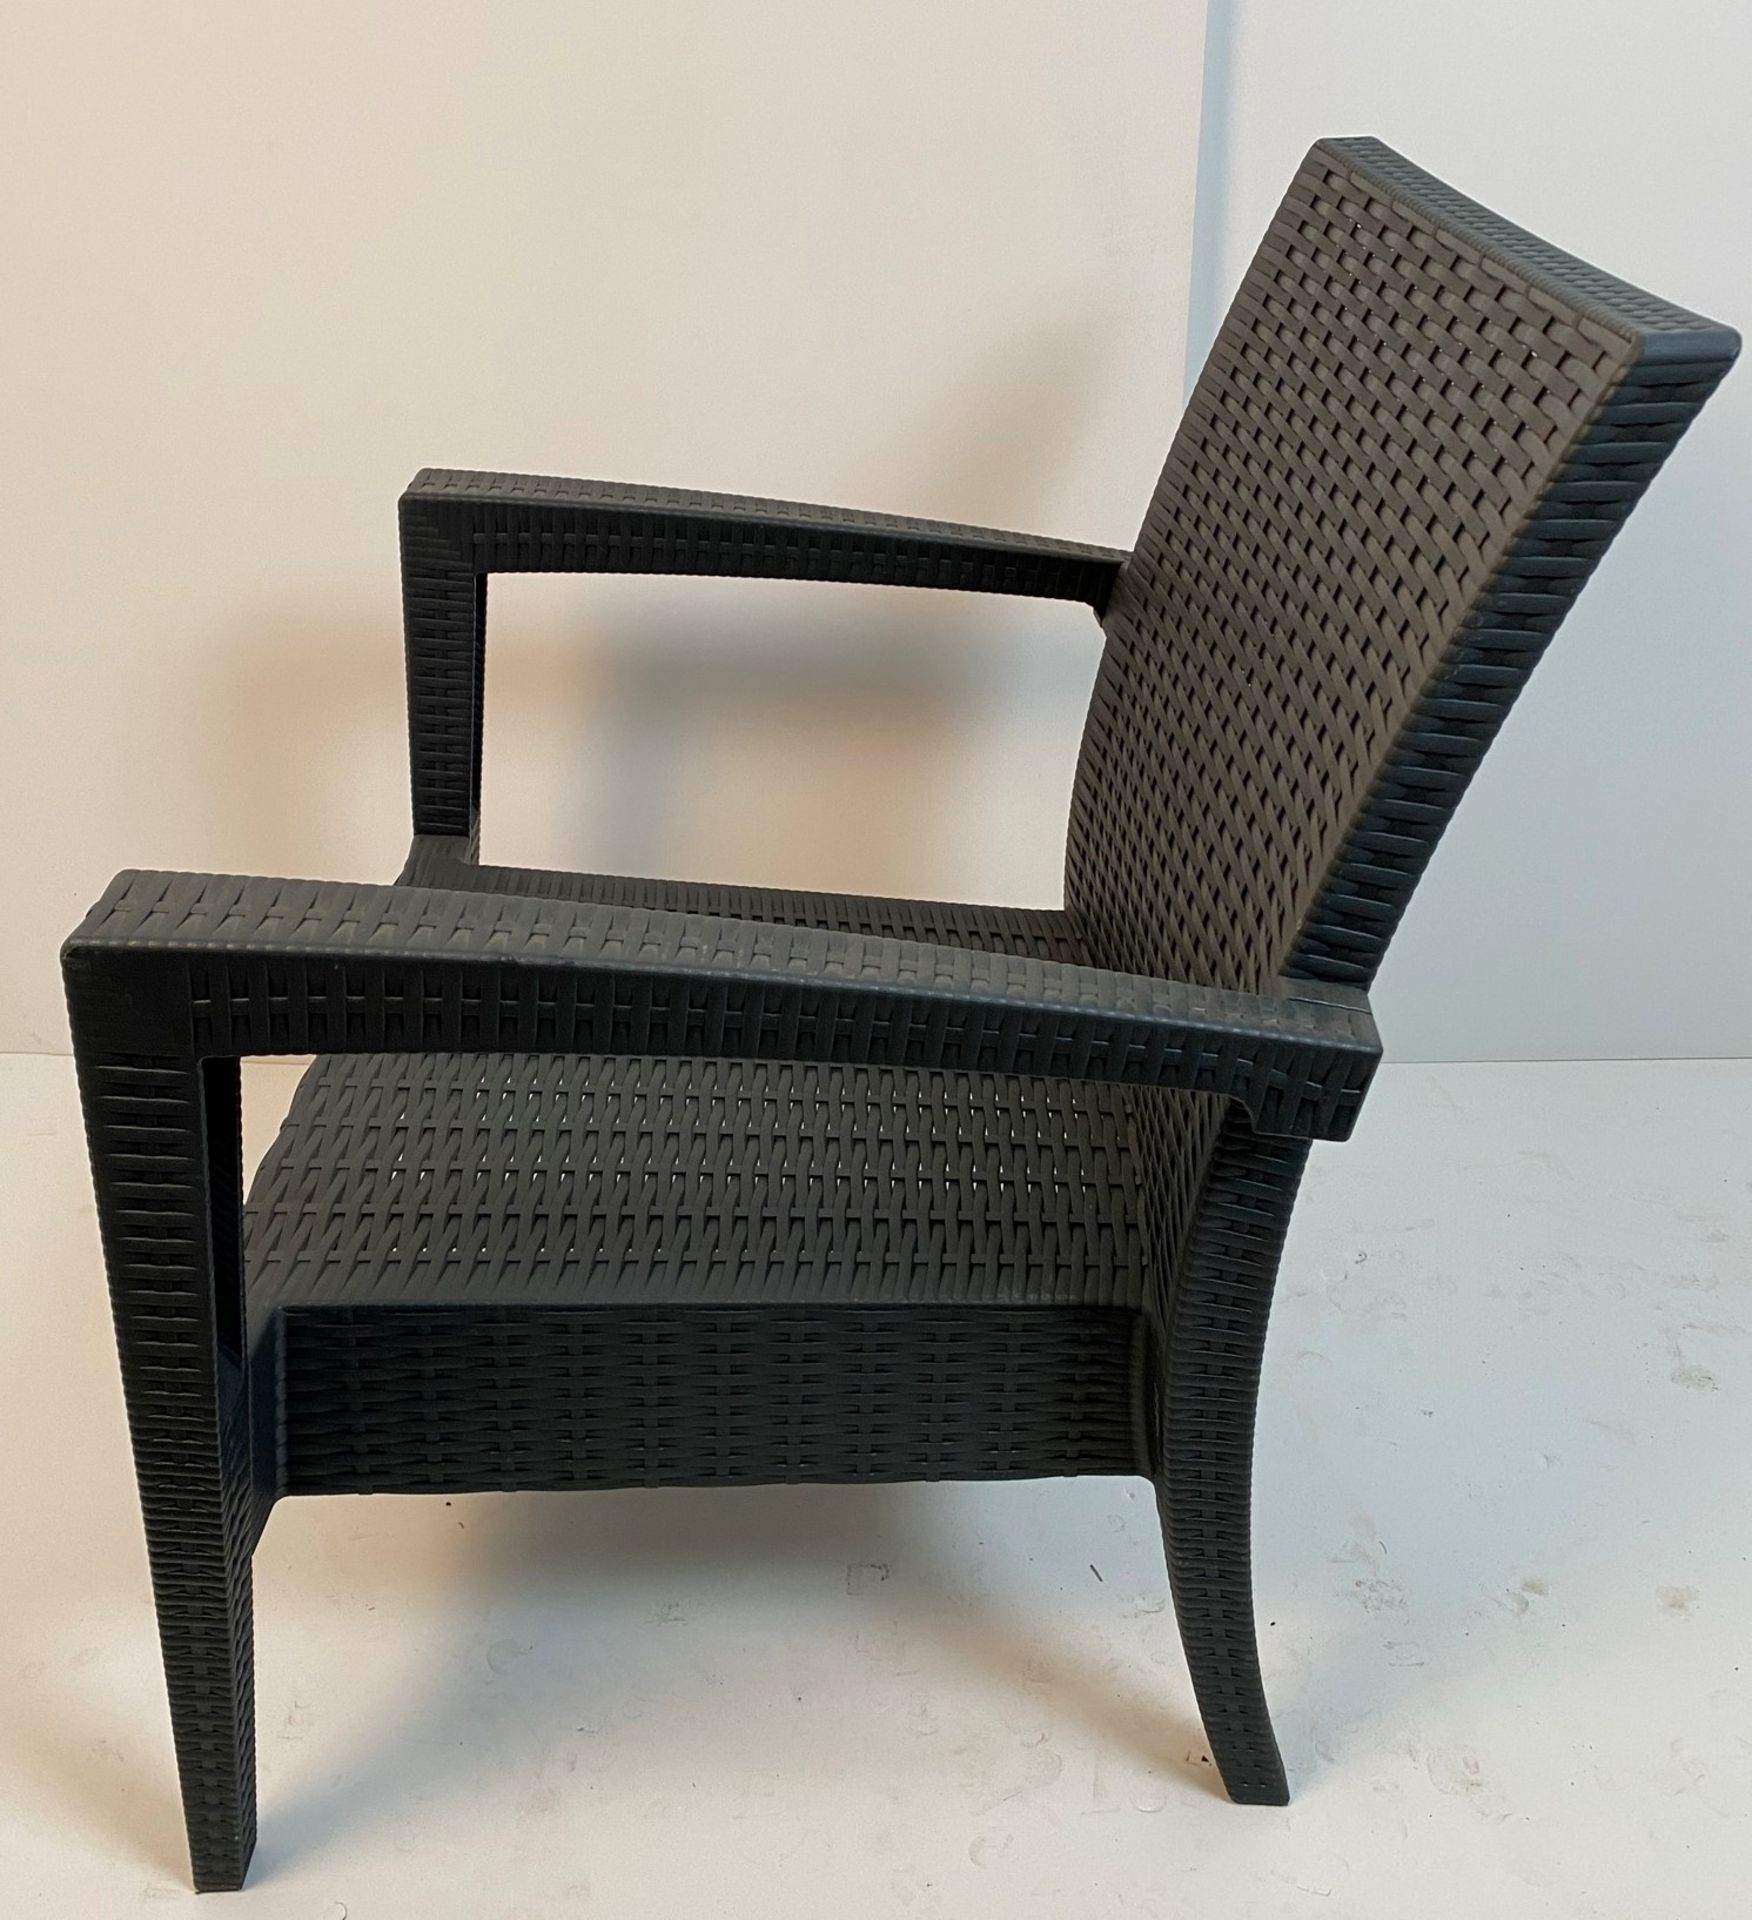 2 x Siesta Miami Rattan Effect Plastic Armchairs - Image 2 of 2